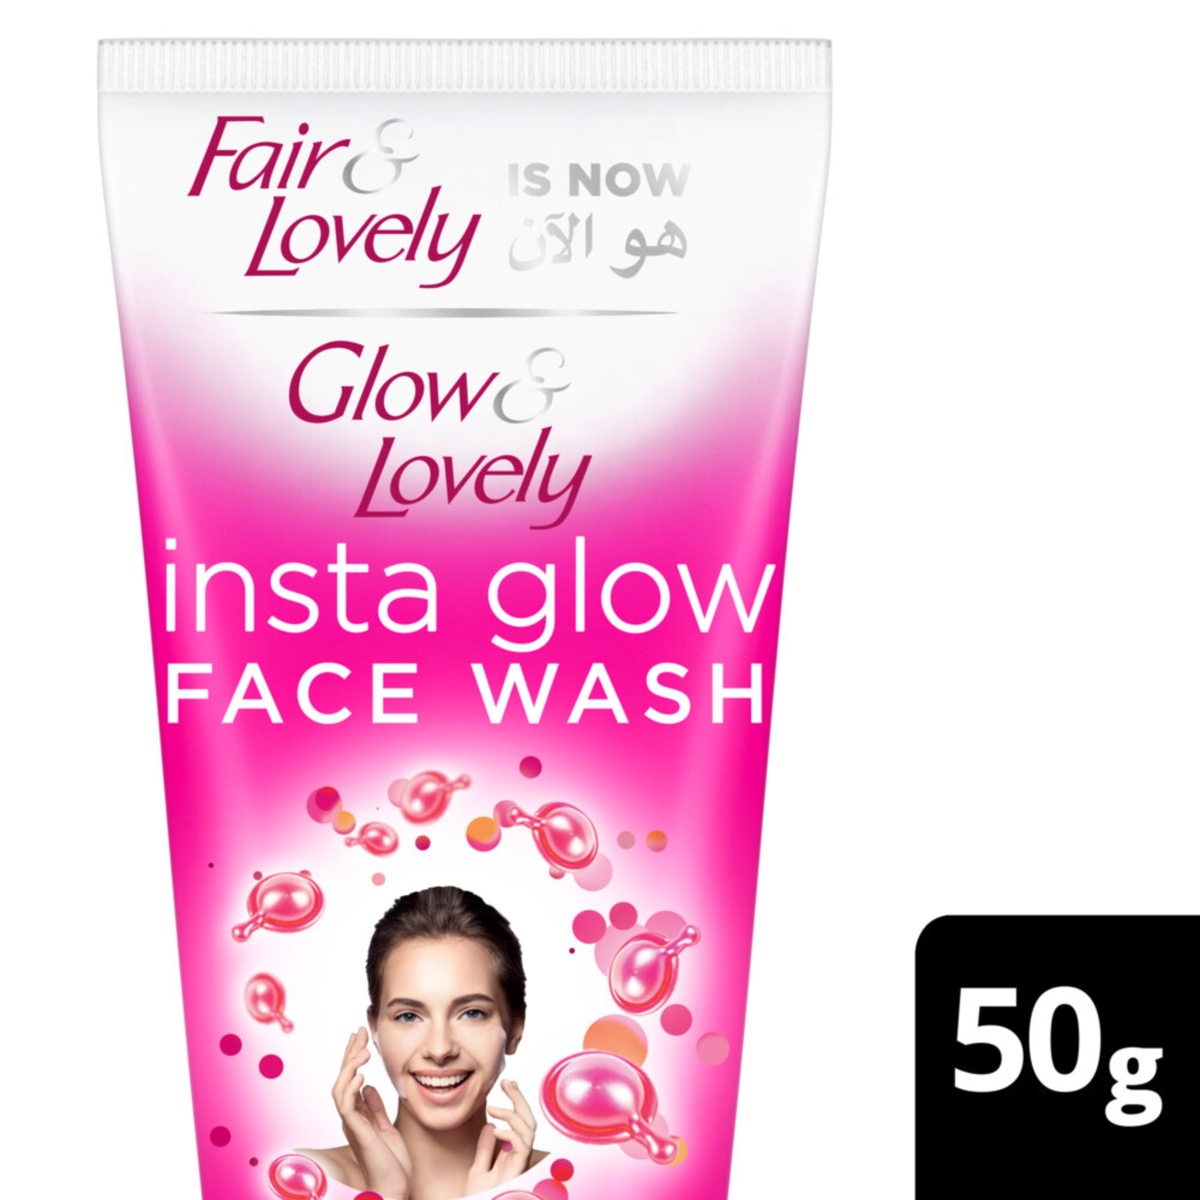 Glow & Lovely Instant Glow Facewash 50 g